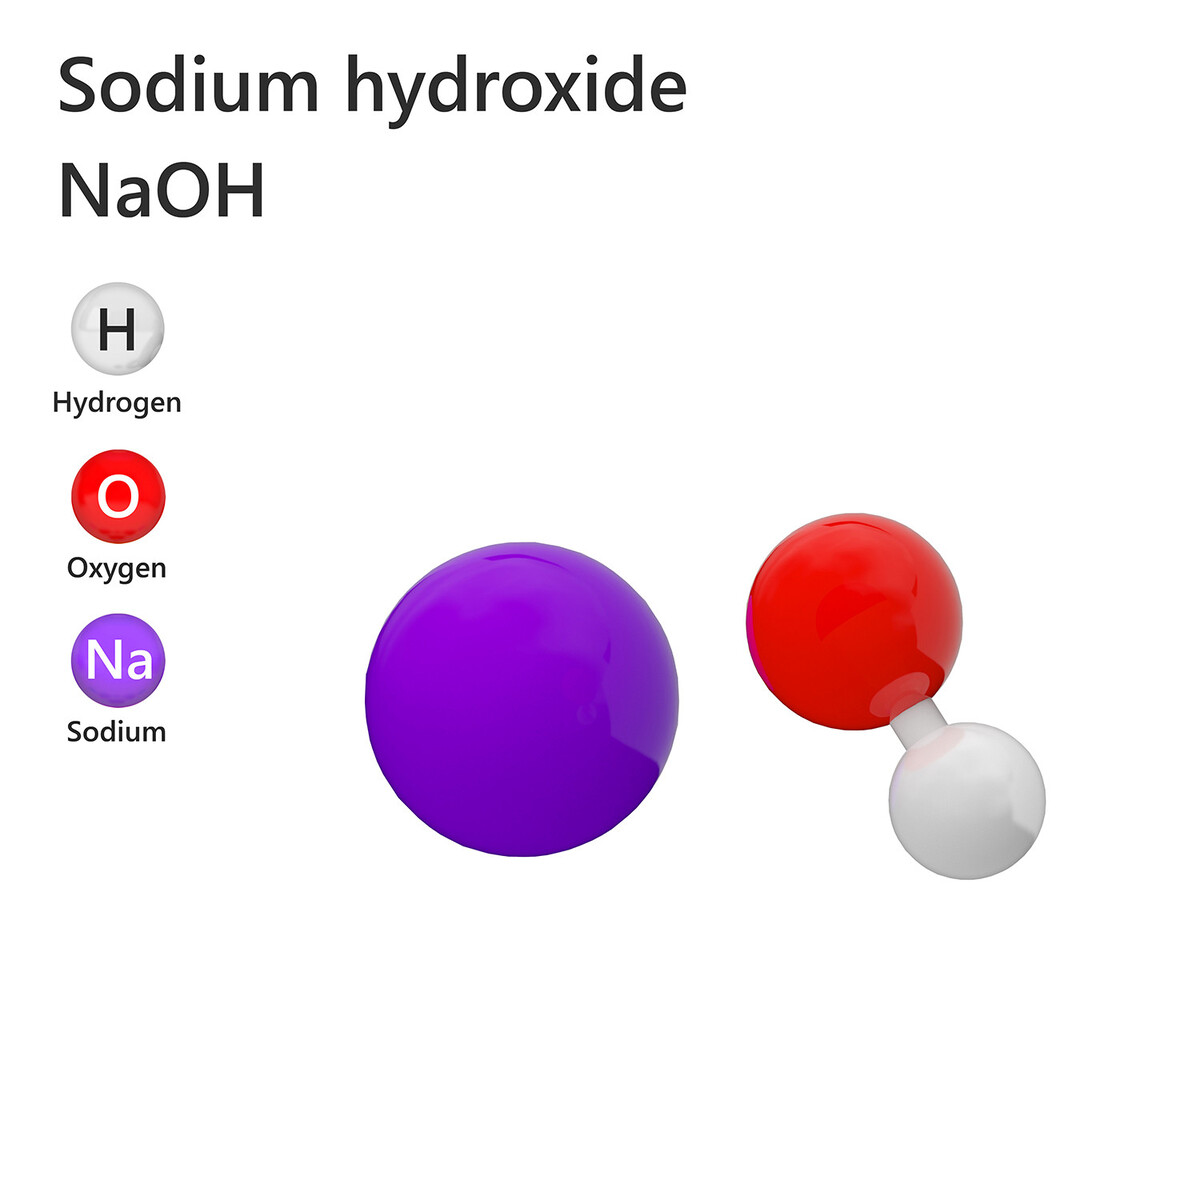 Soude caustique en microperles - Hydroxyde de sodium - CAS N° 1310-73-2